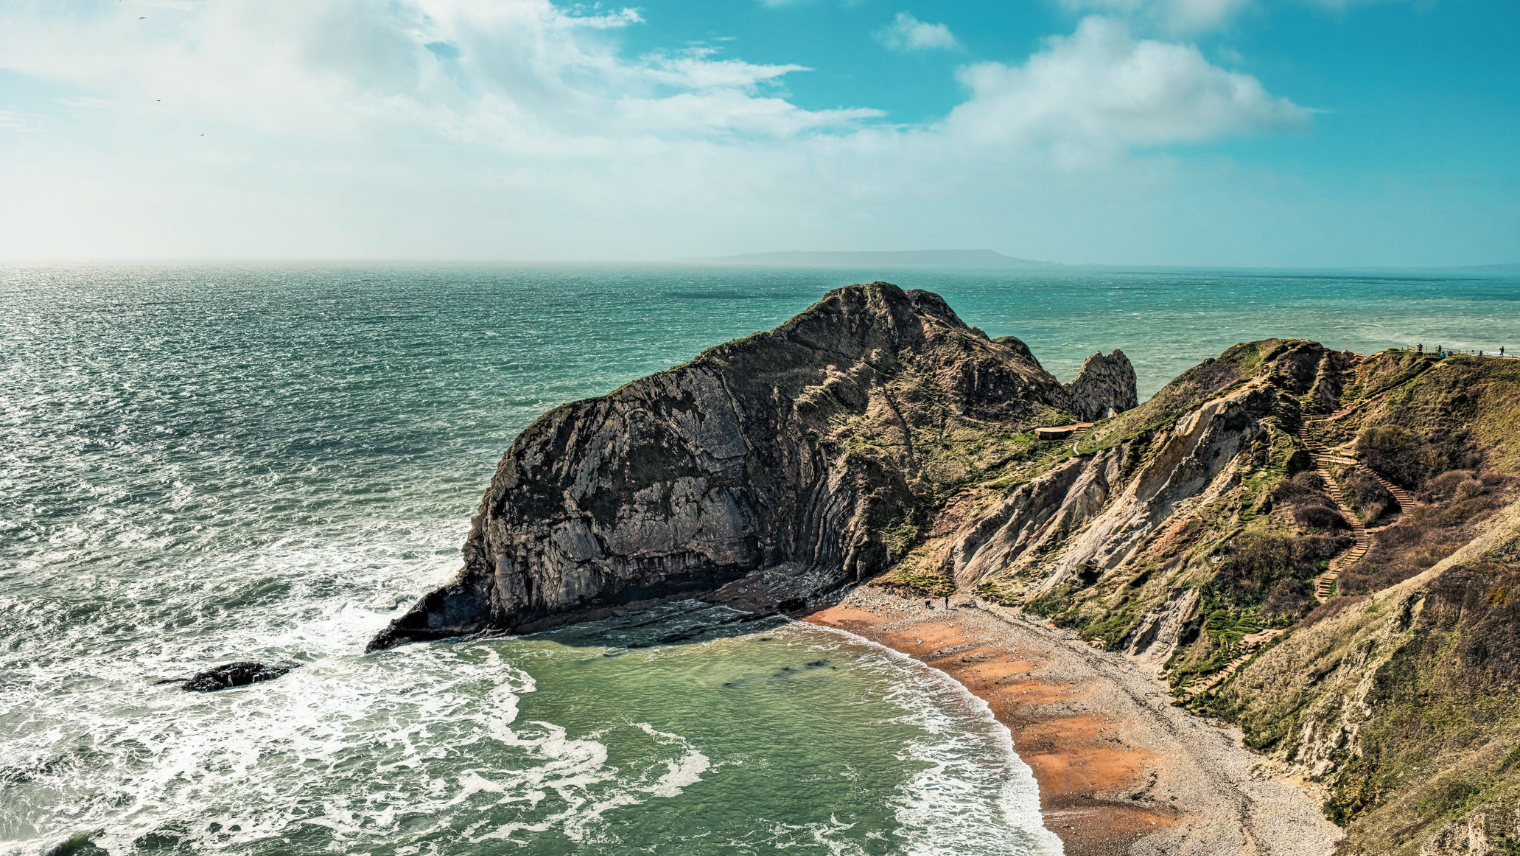 An image of Dorset's coastline